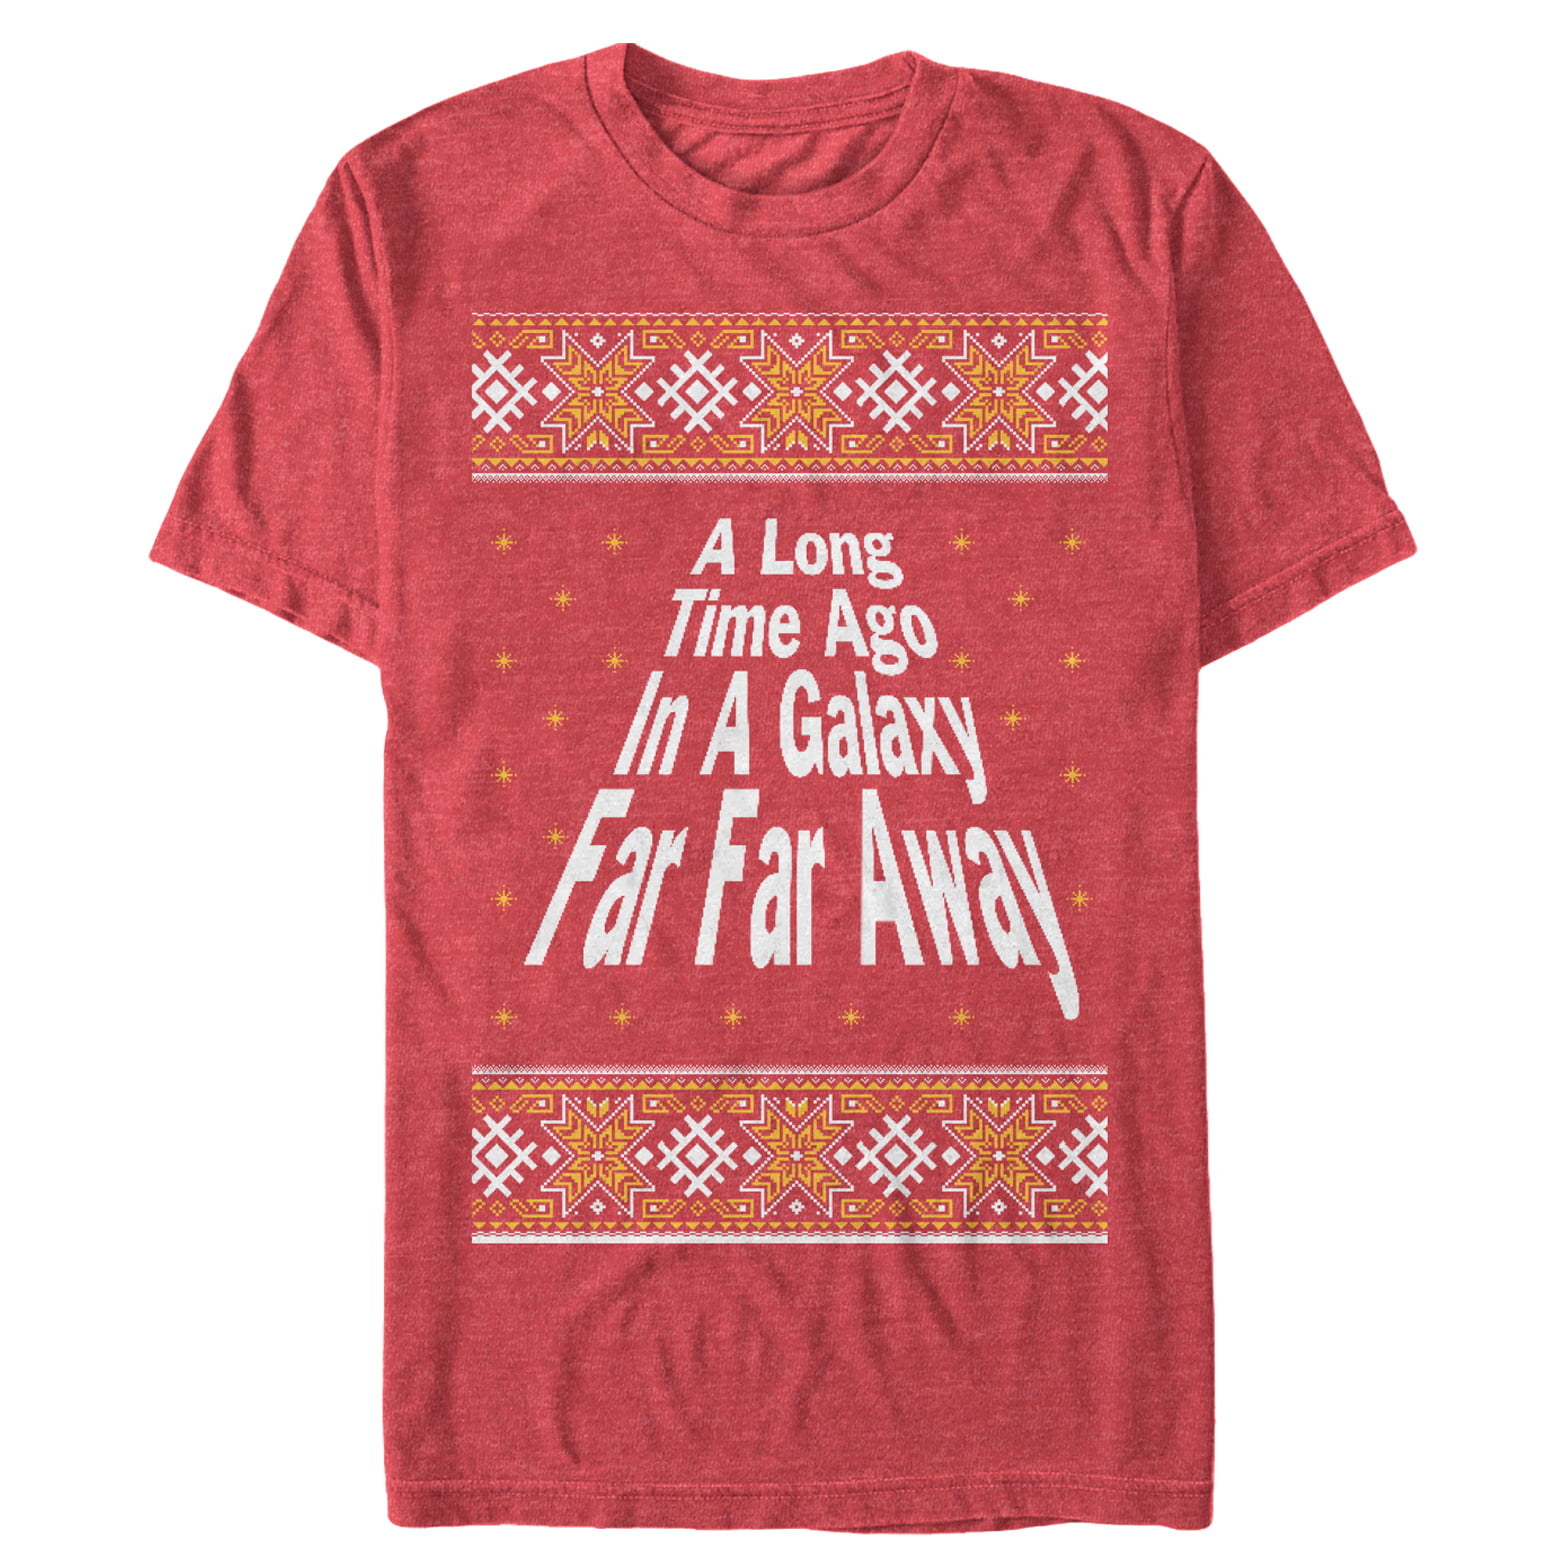 Star Wars T Shirt A Long Time Ago In A Galaxy Far Far Away